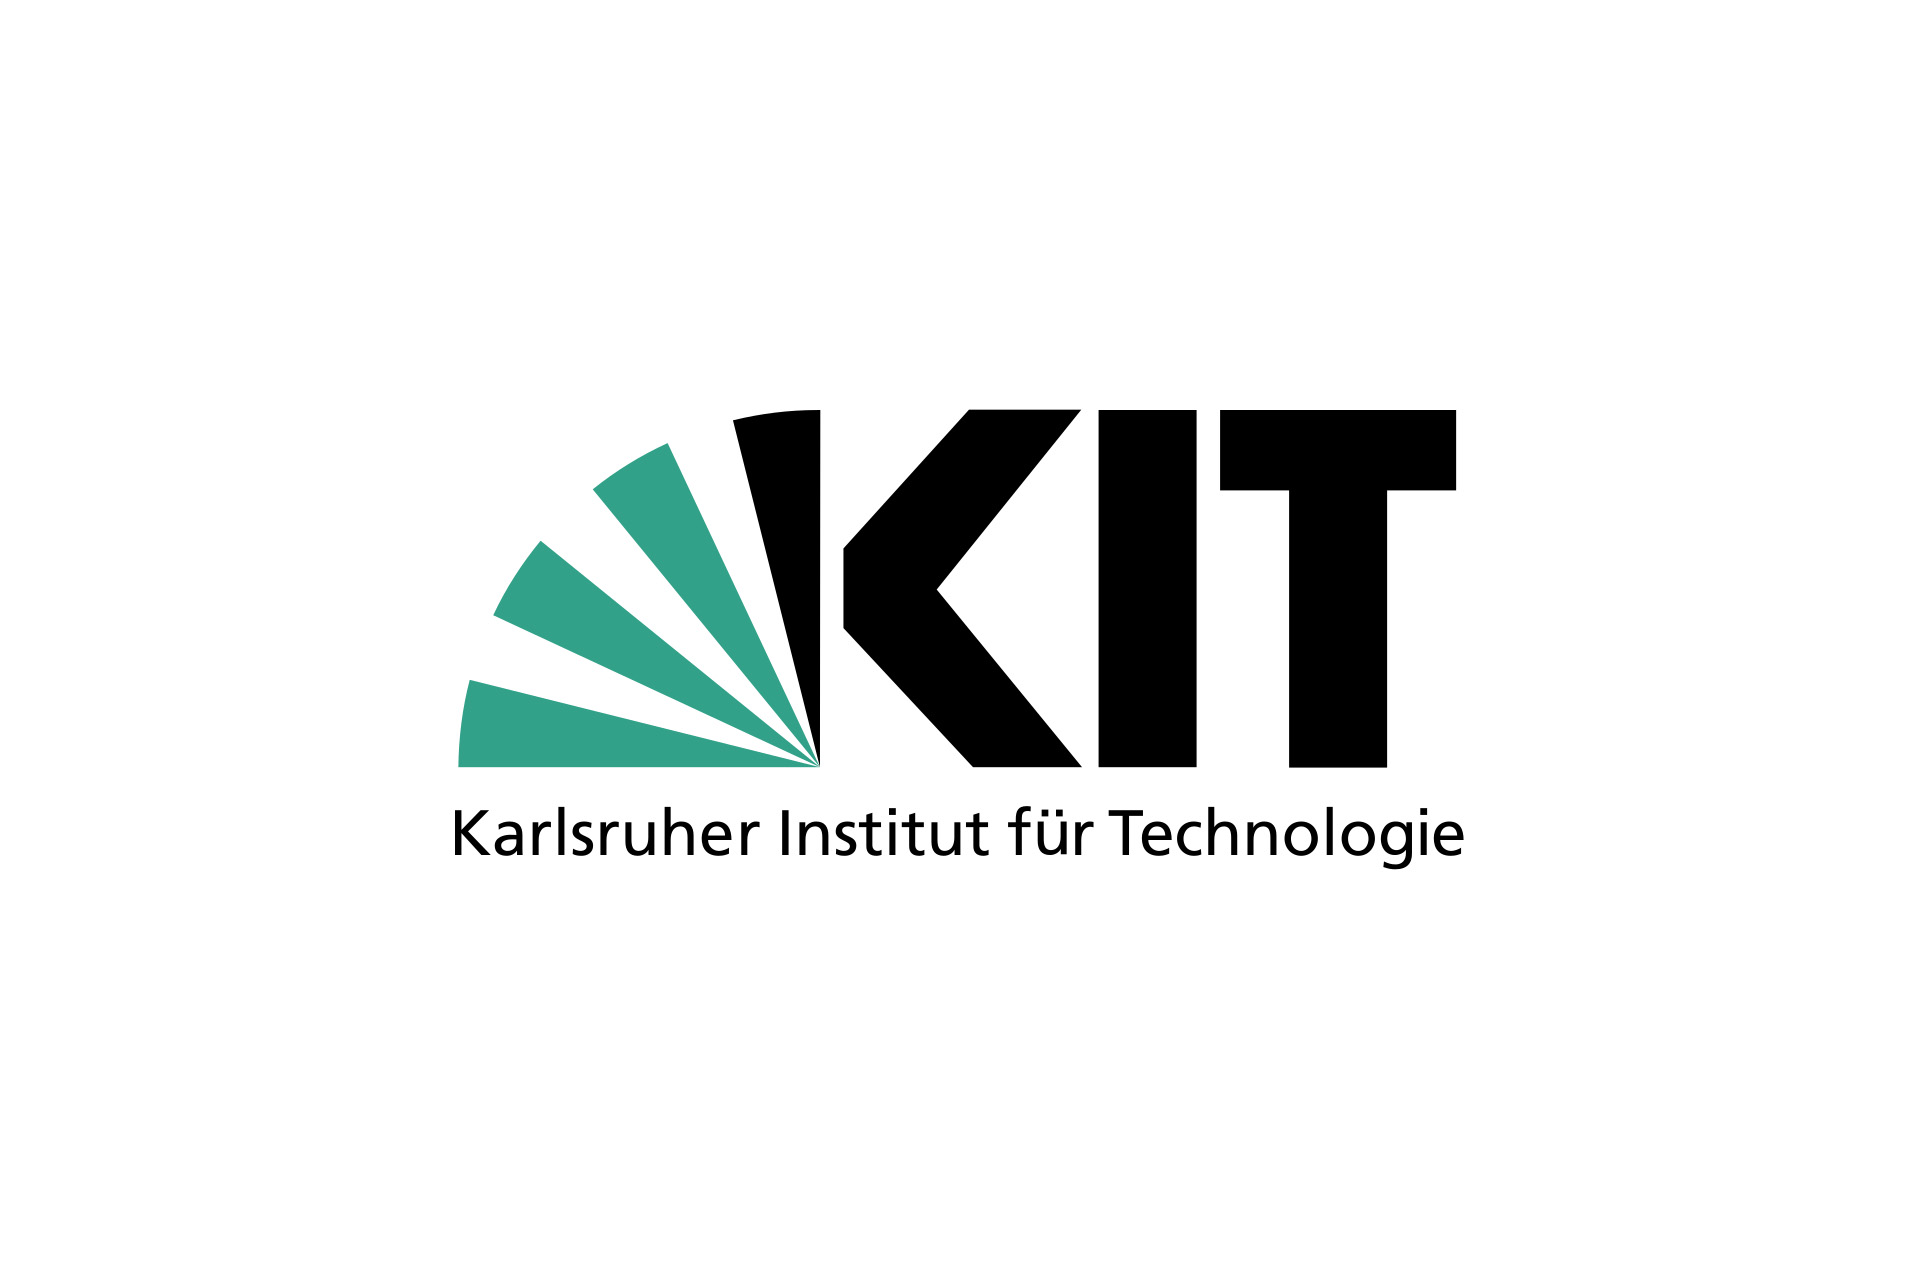 Catalogo Virtuale di Karlsruhe (KVK)